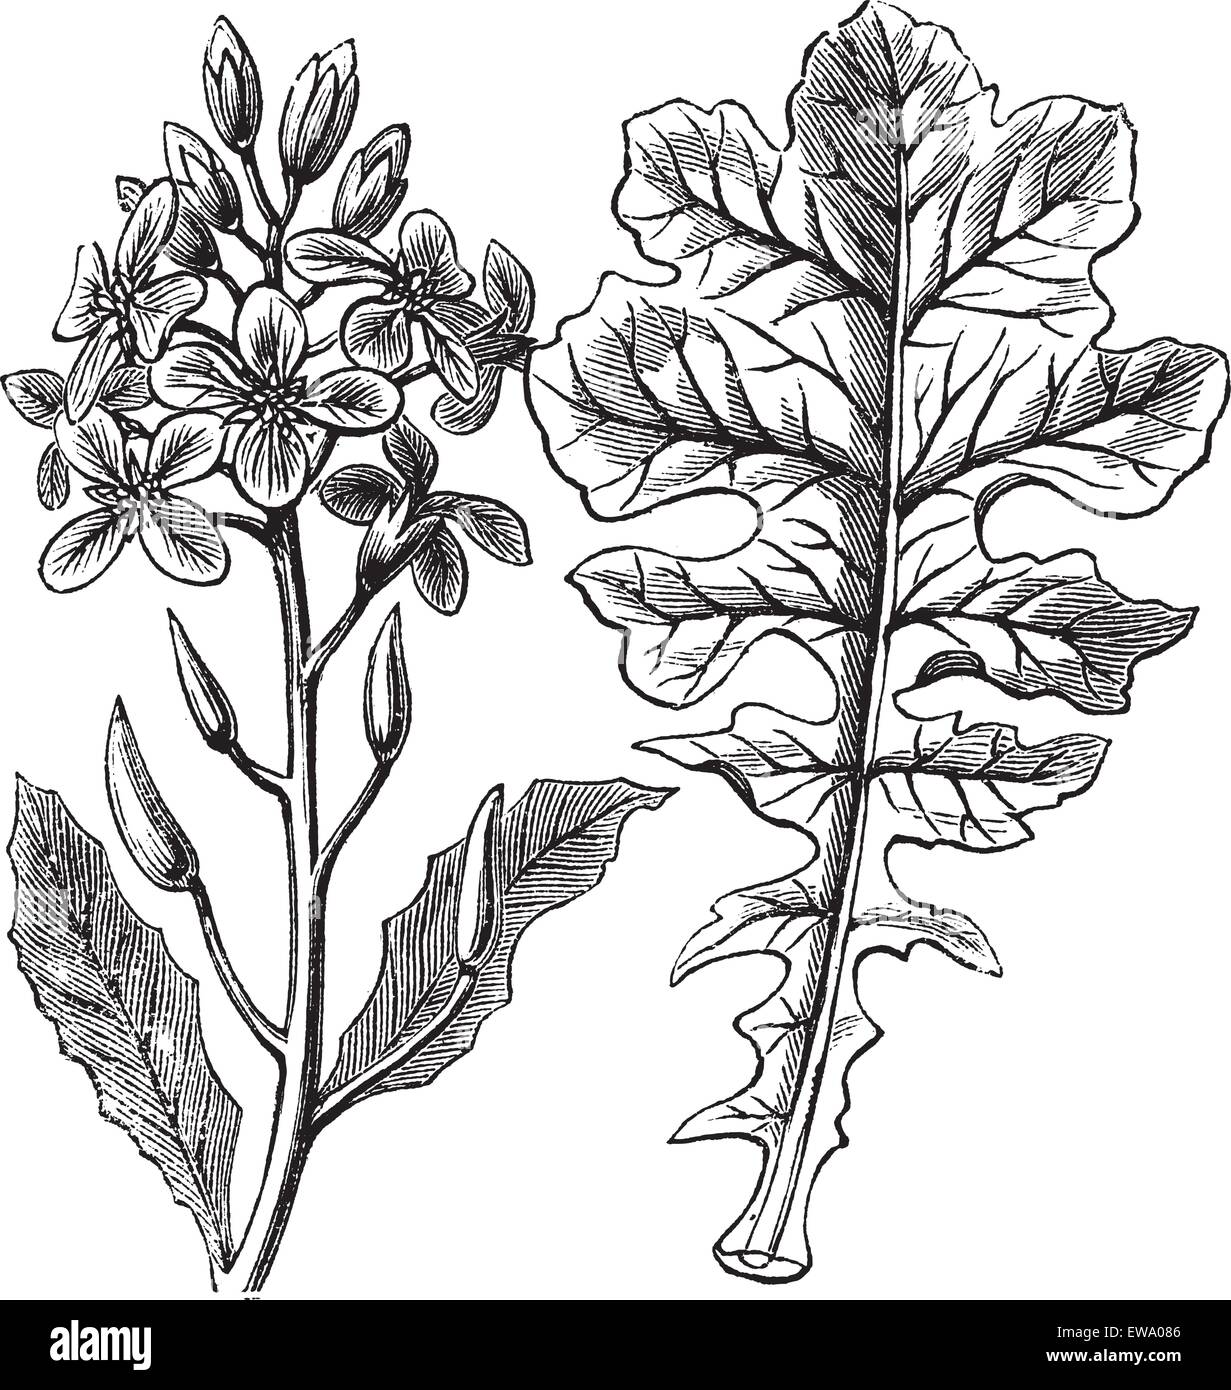 Violet Cabbage or Moricandia sp., vintage engraving. Old engraved illustration of a Violet Cabbage showing flowers (left) and leaf (right). Stock Vector